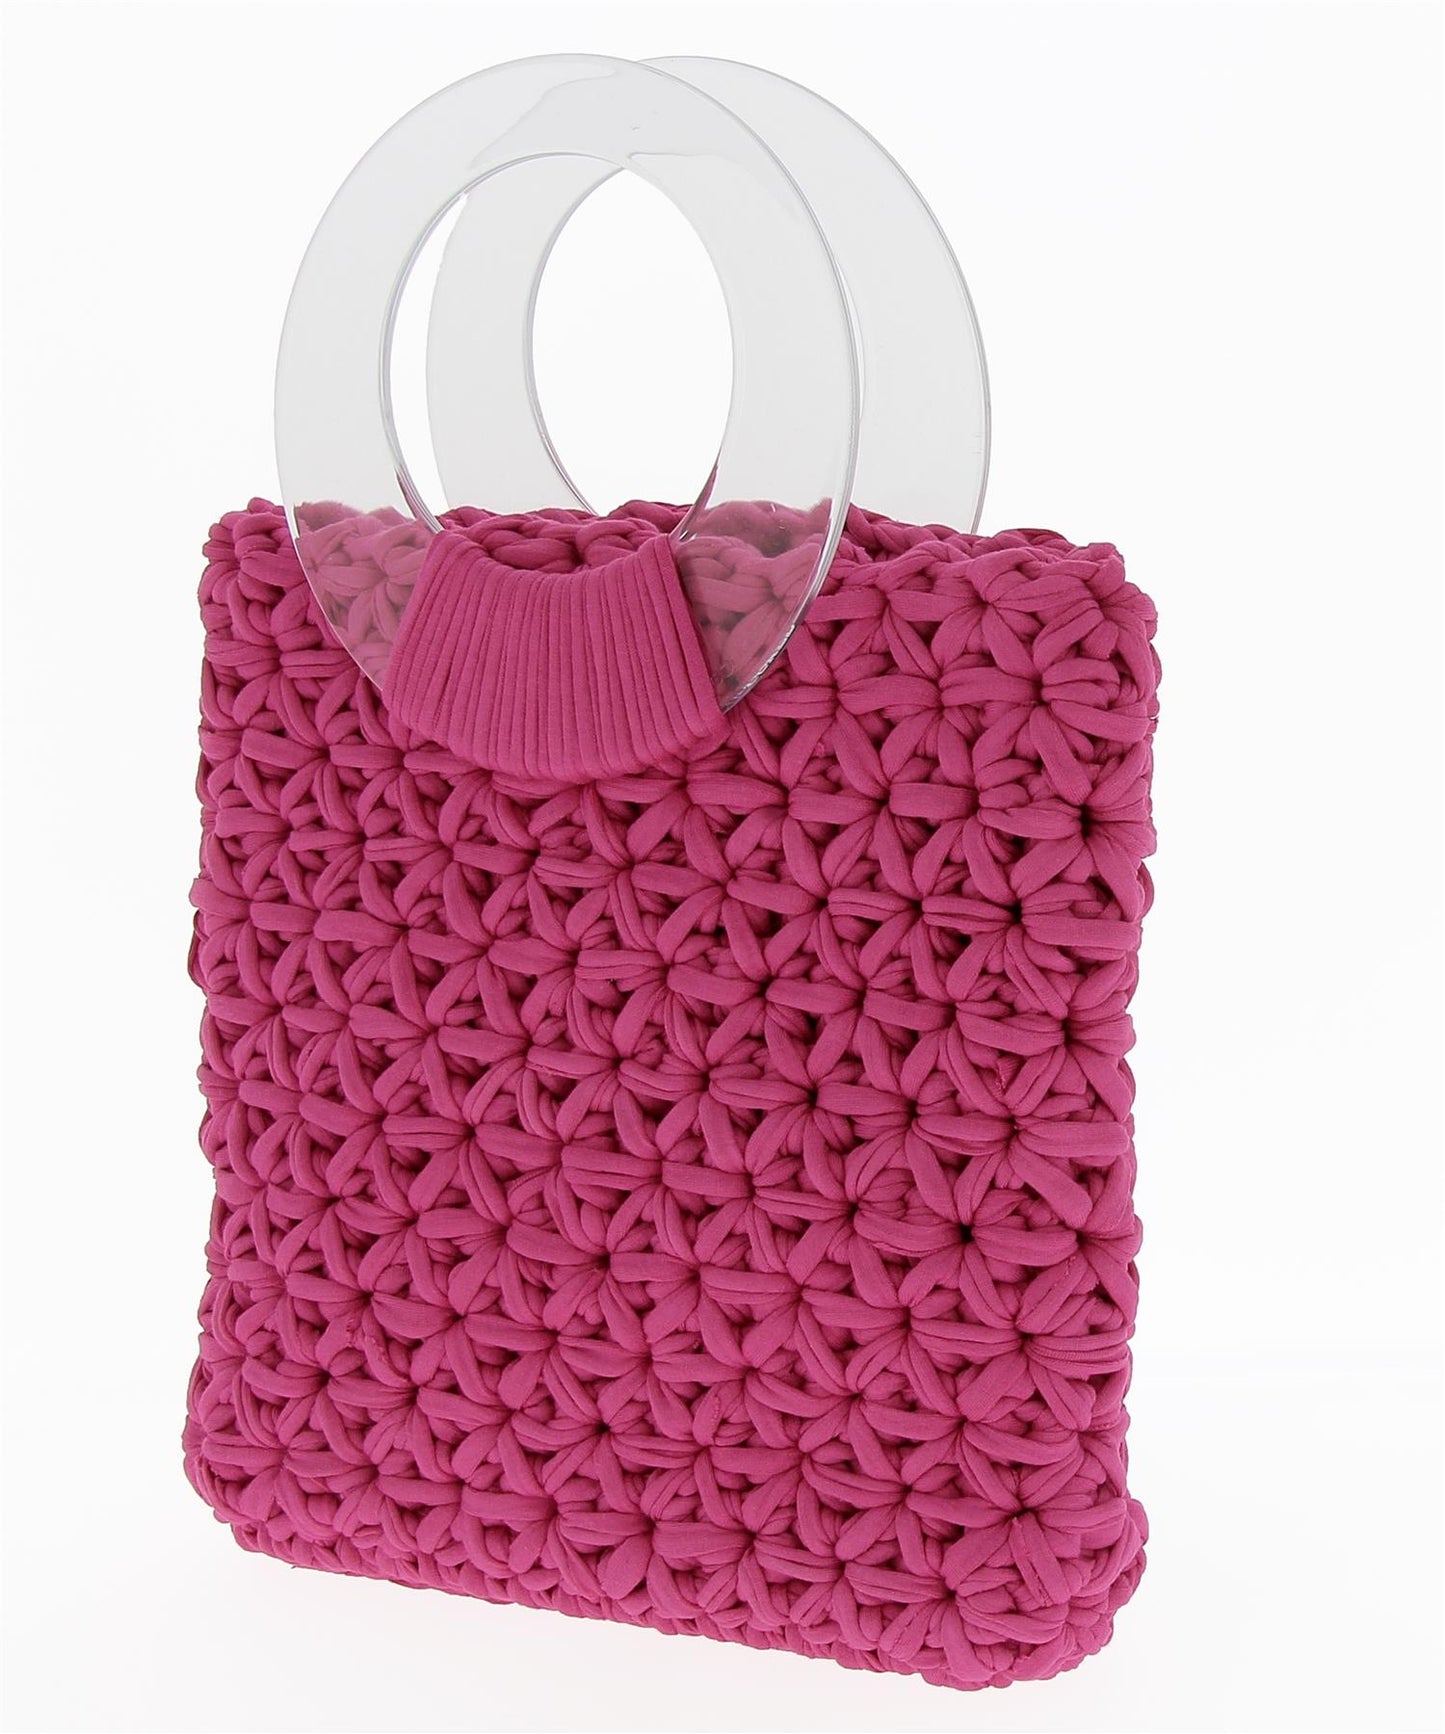 Hoooked RibbonXL Bubblegum Cotton Marbella Bag Crochet Kit